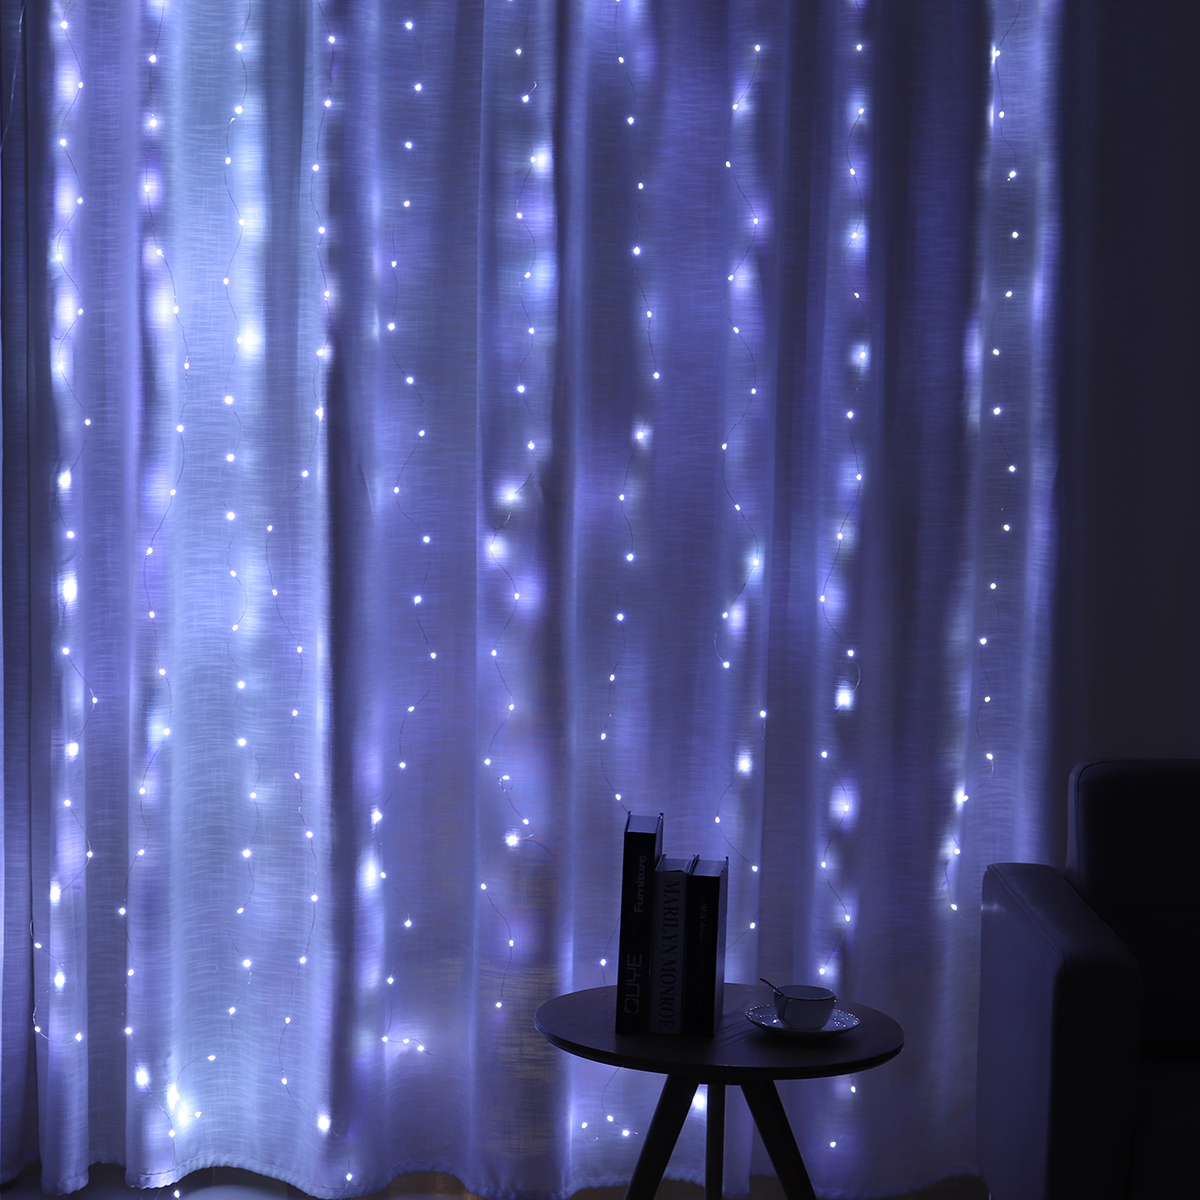 100200300-LED-Window-Curtain-Lights-USB-Waterproof-Fairy-String-Lights-Decorative-Christmas-Twinkle--1806542-4